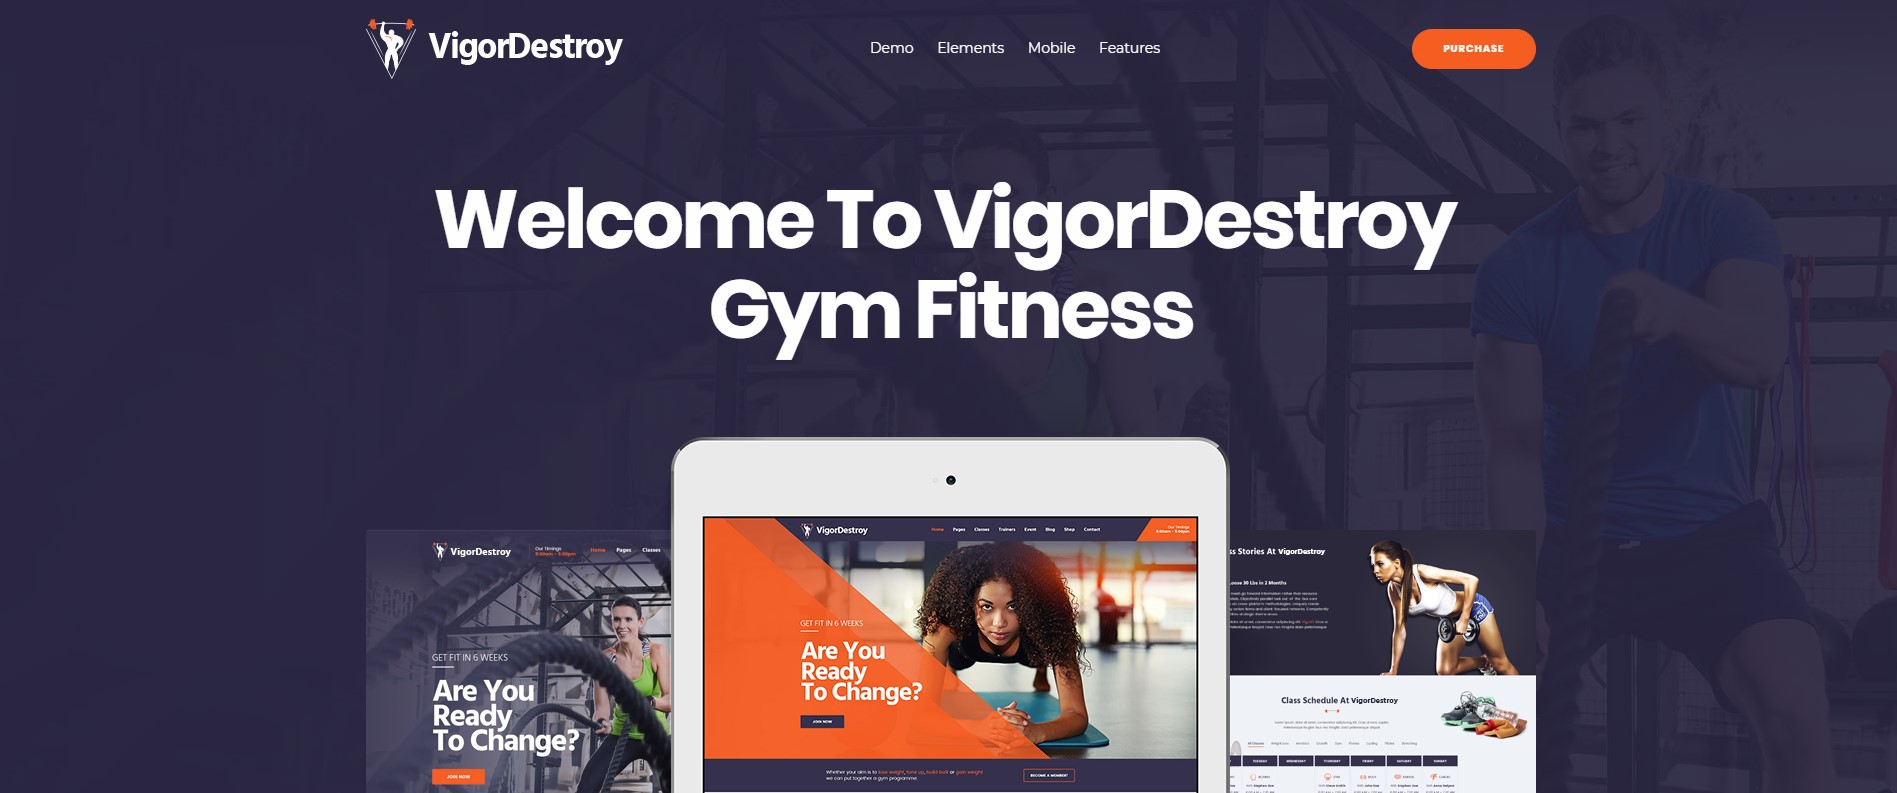 VigorDestroy Gym & Fitness Center WordPress Theme